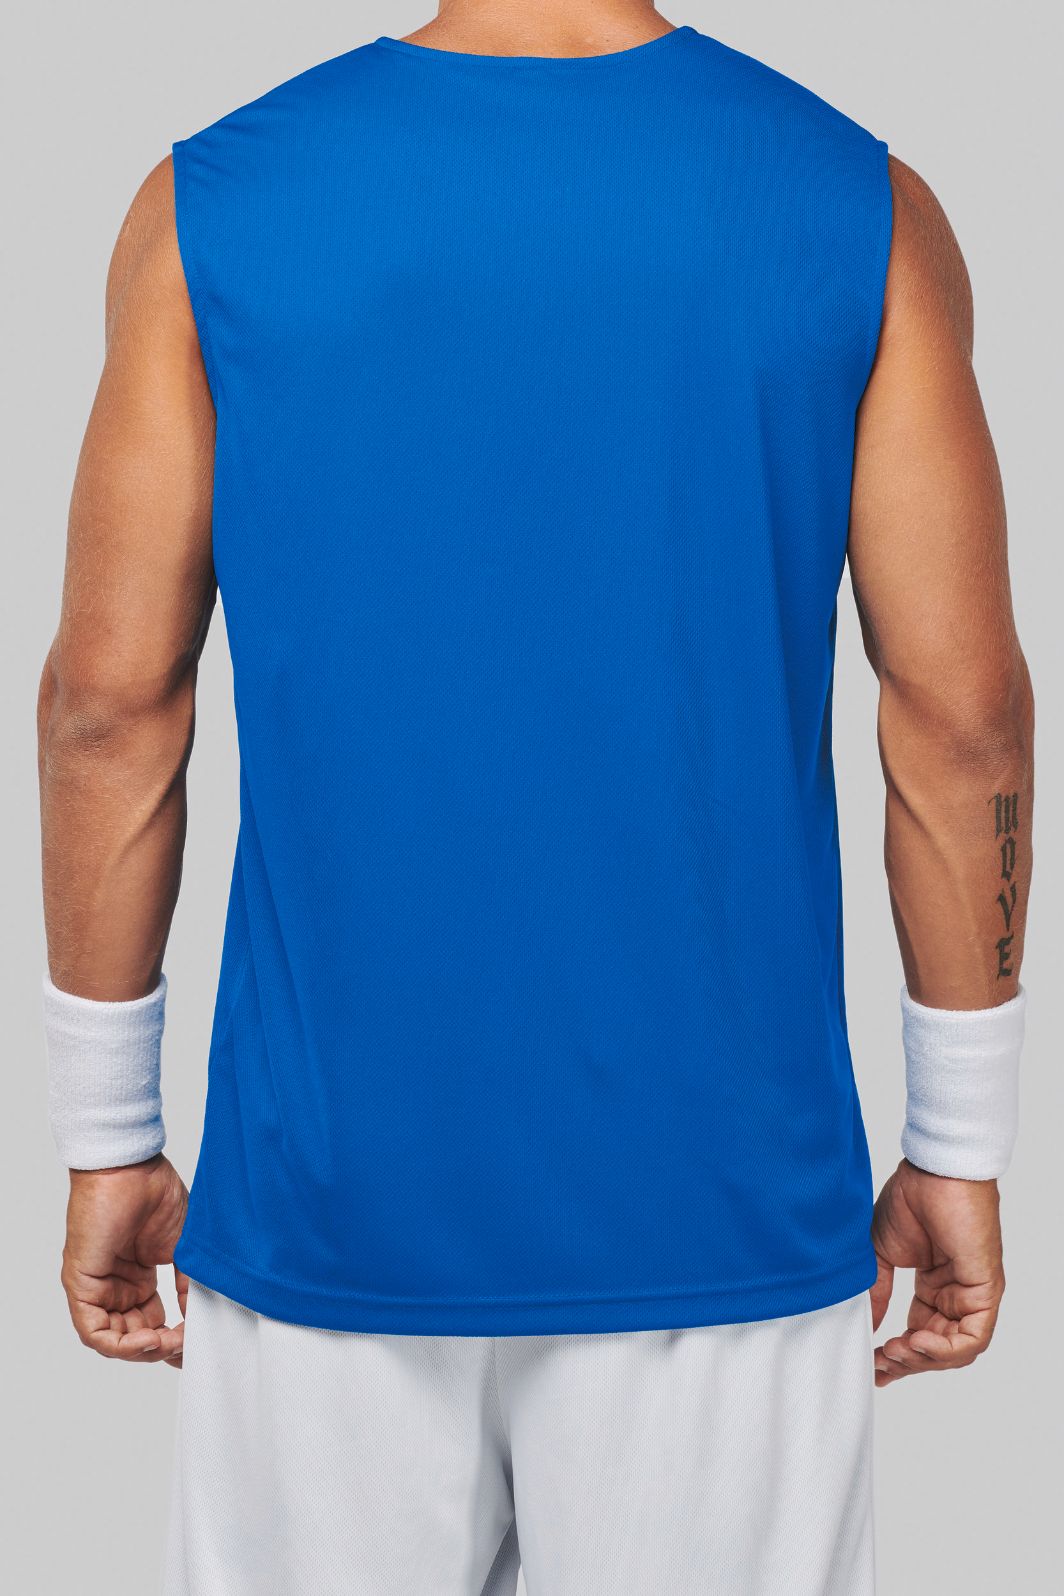 Sportovní dres - oboustranné trièko bez rukávù